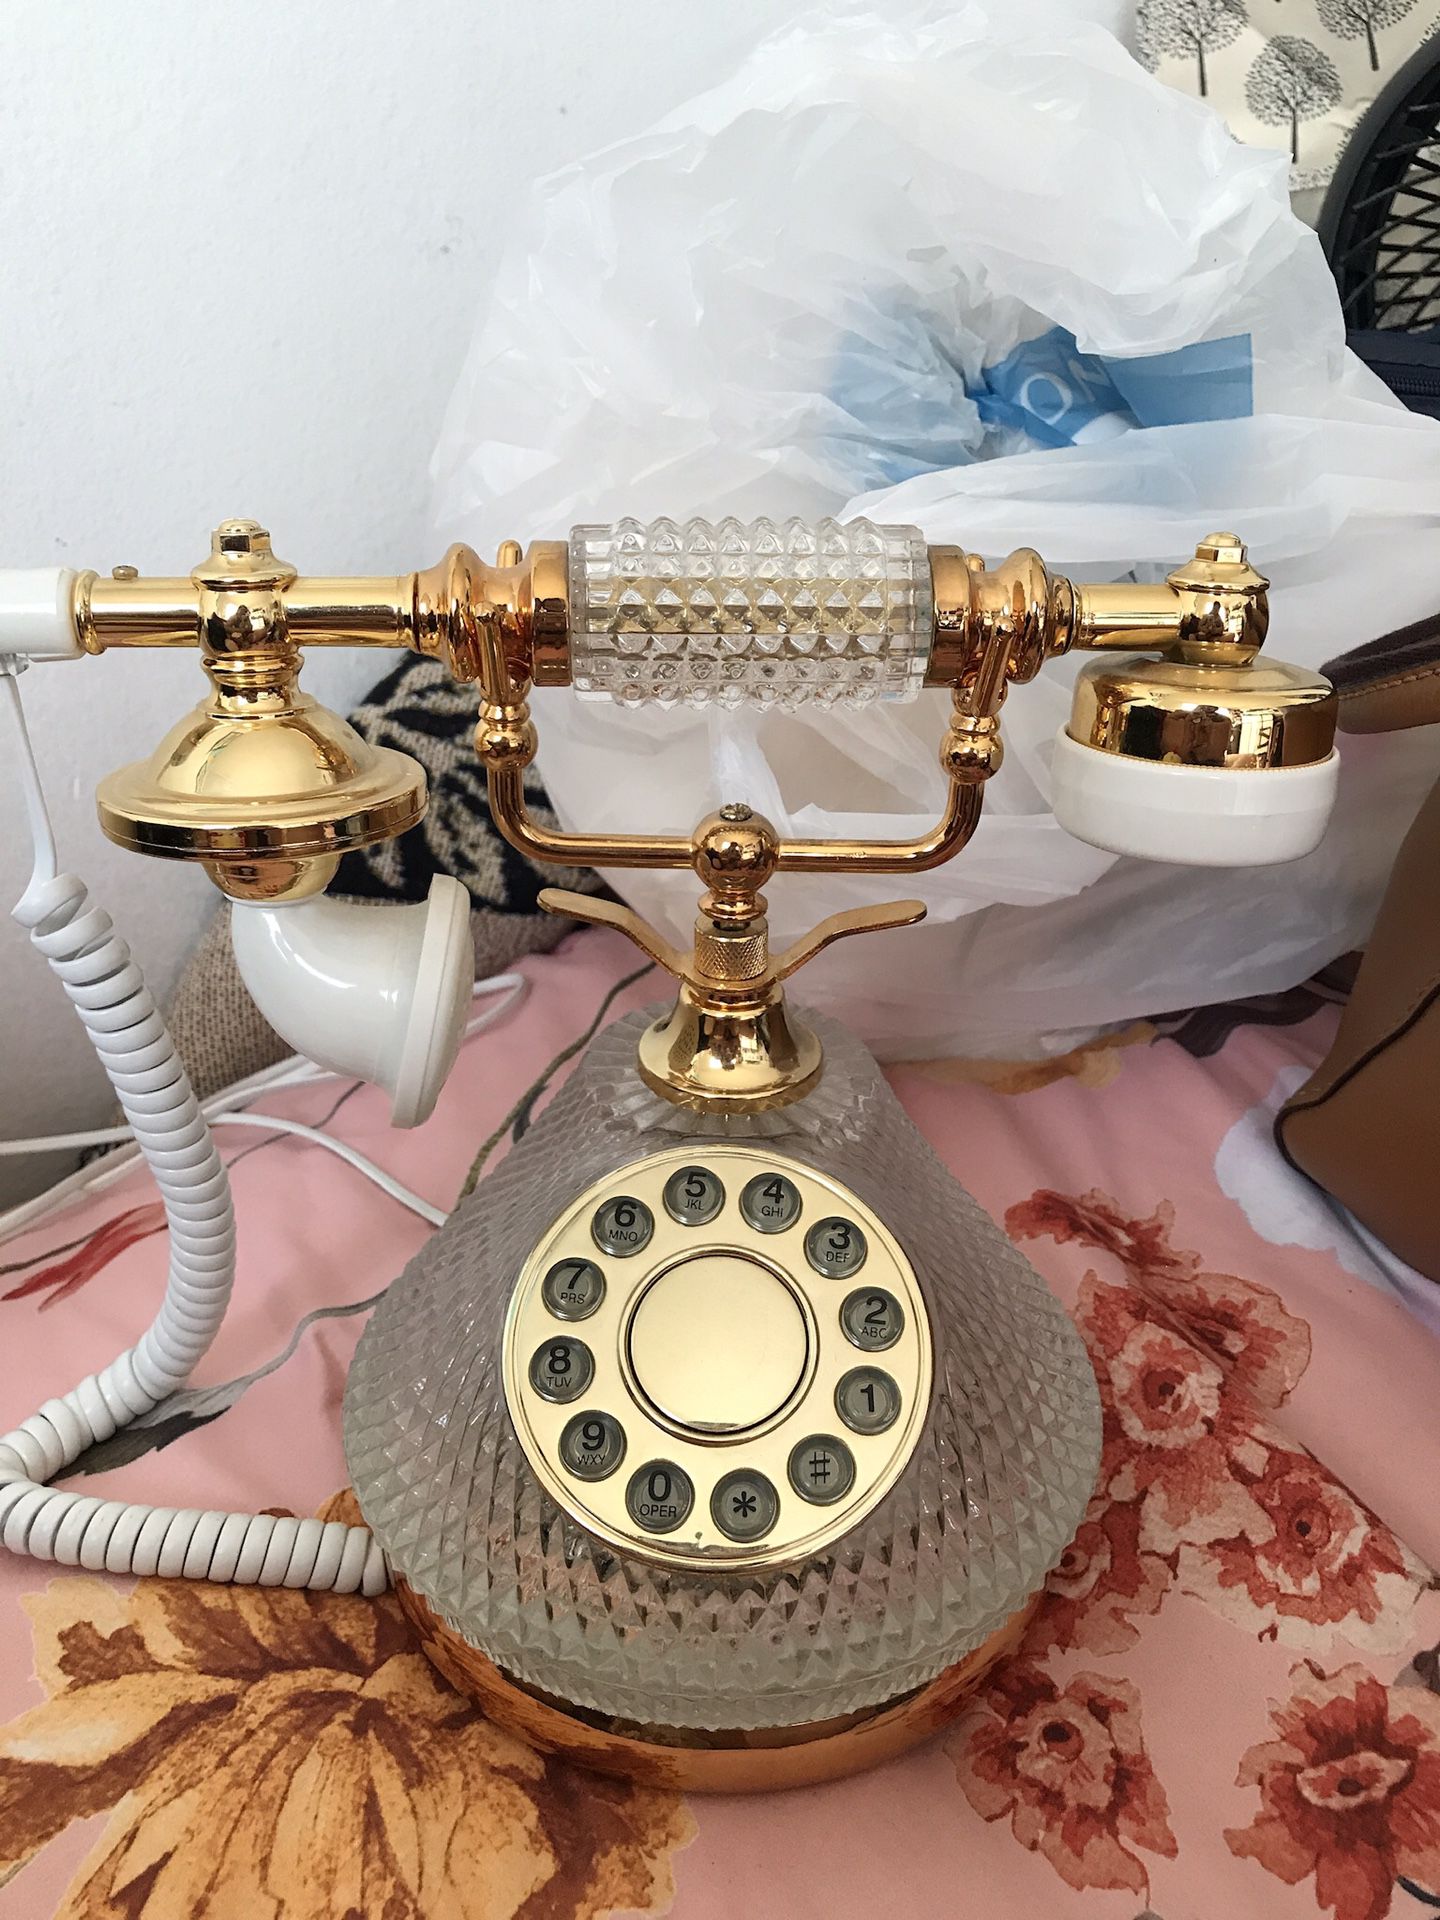 BEAUTIFUL vintage phone.